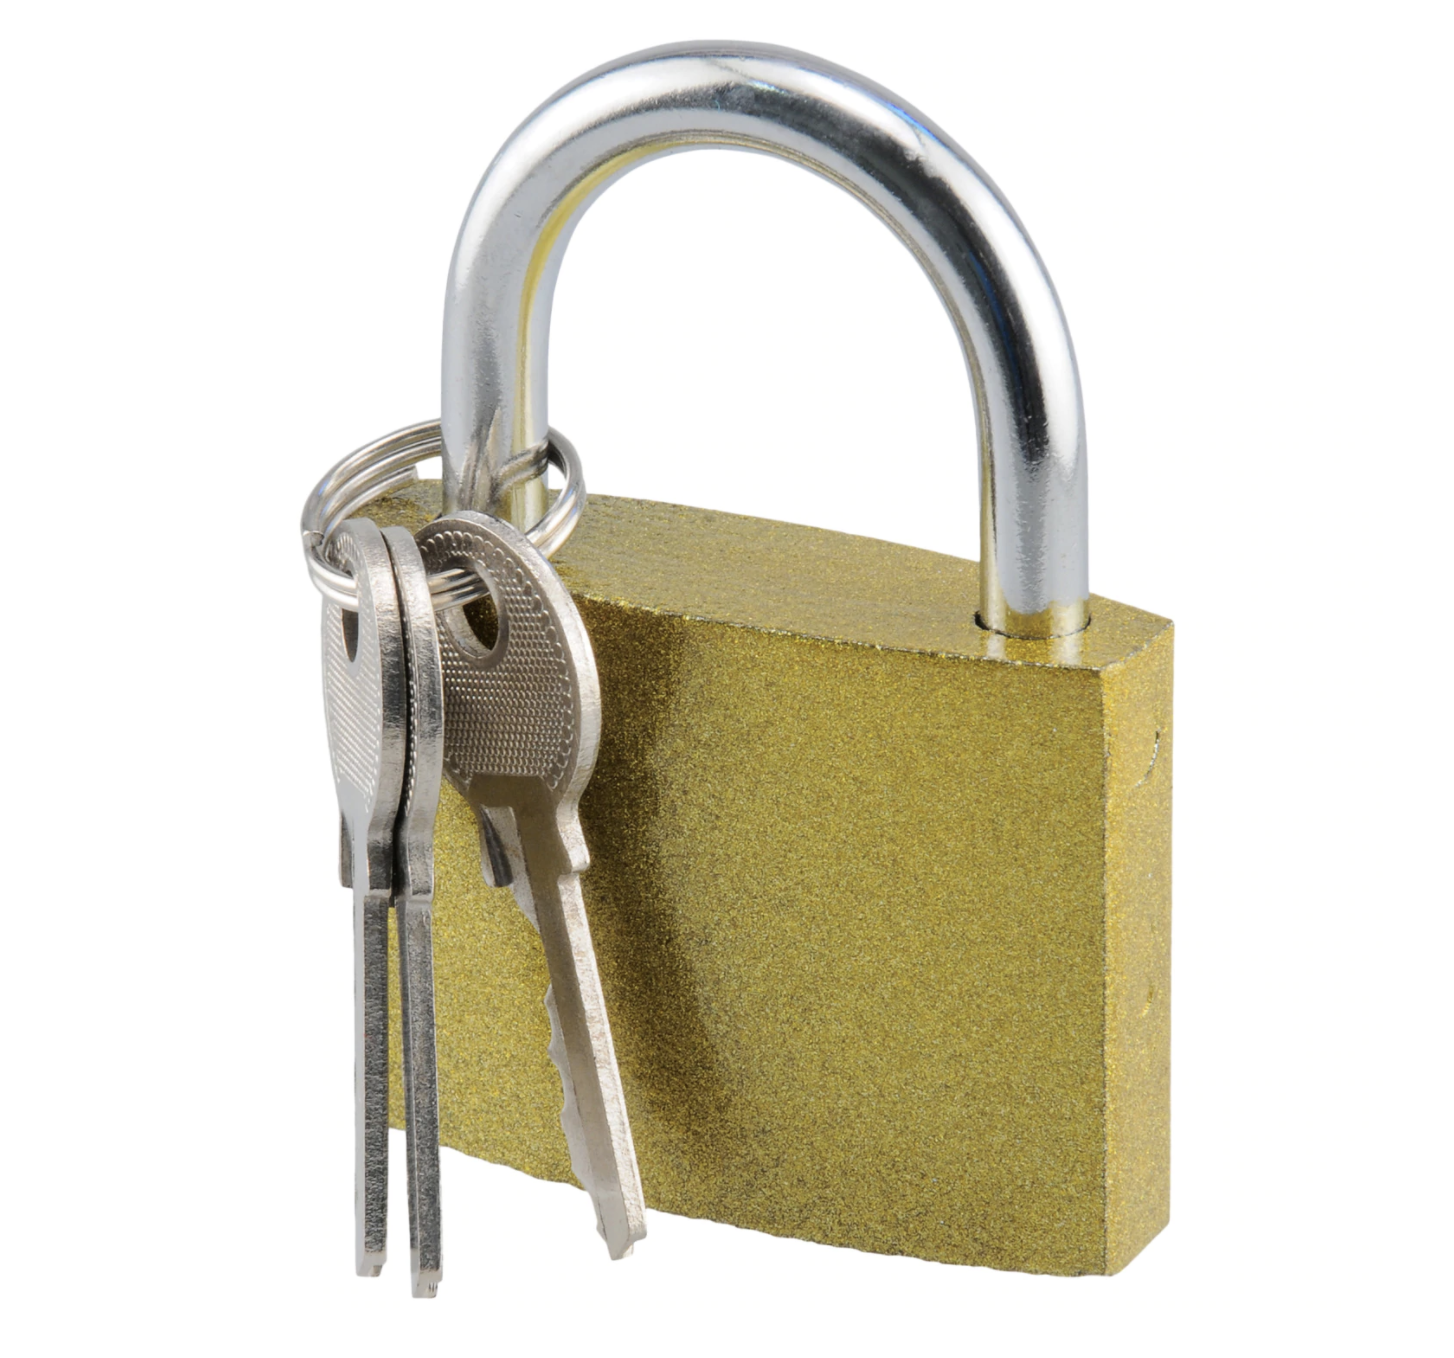 Padlock - Locks with keys for Luggage Lock, Backpack, Locker Lock, Suitcase  Lock, Classroom Matching Game - 2 PACK 